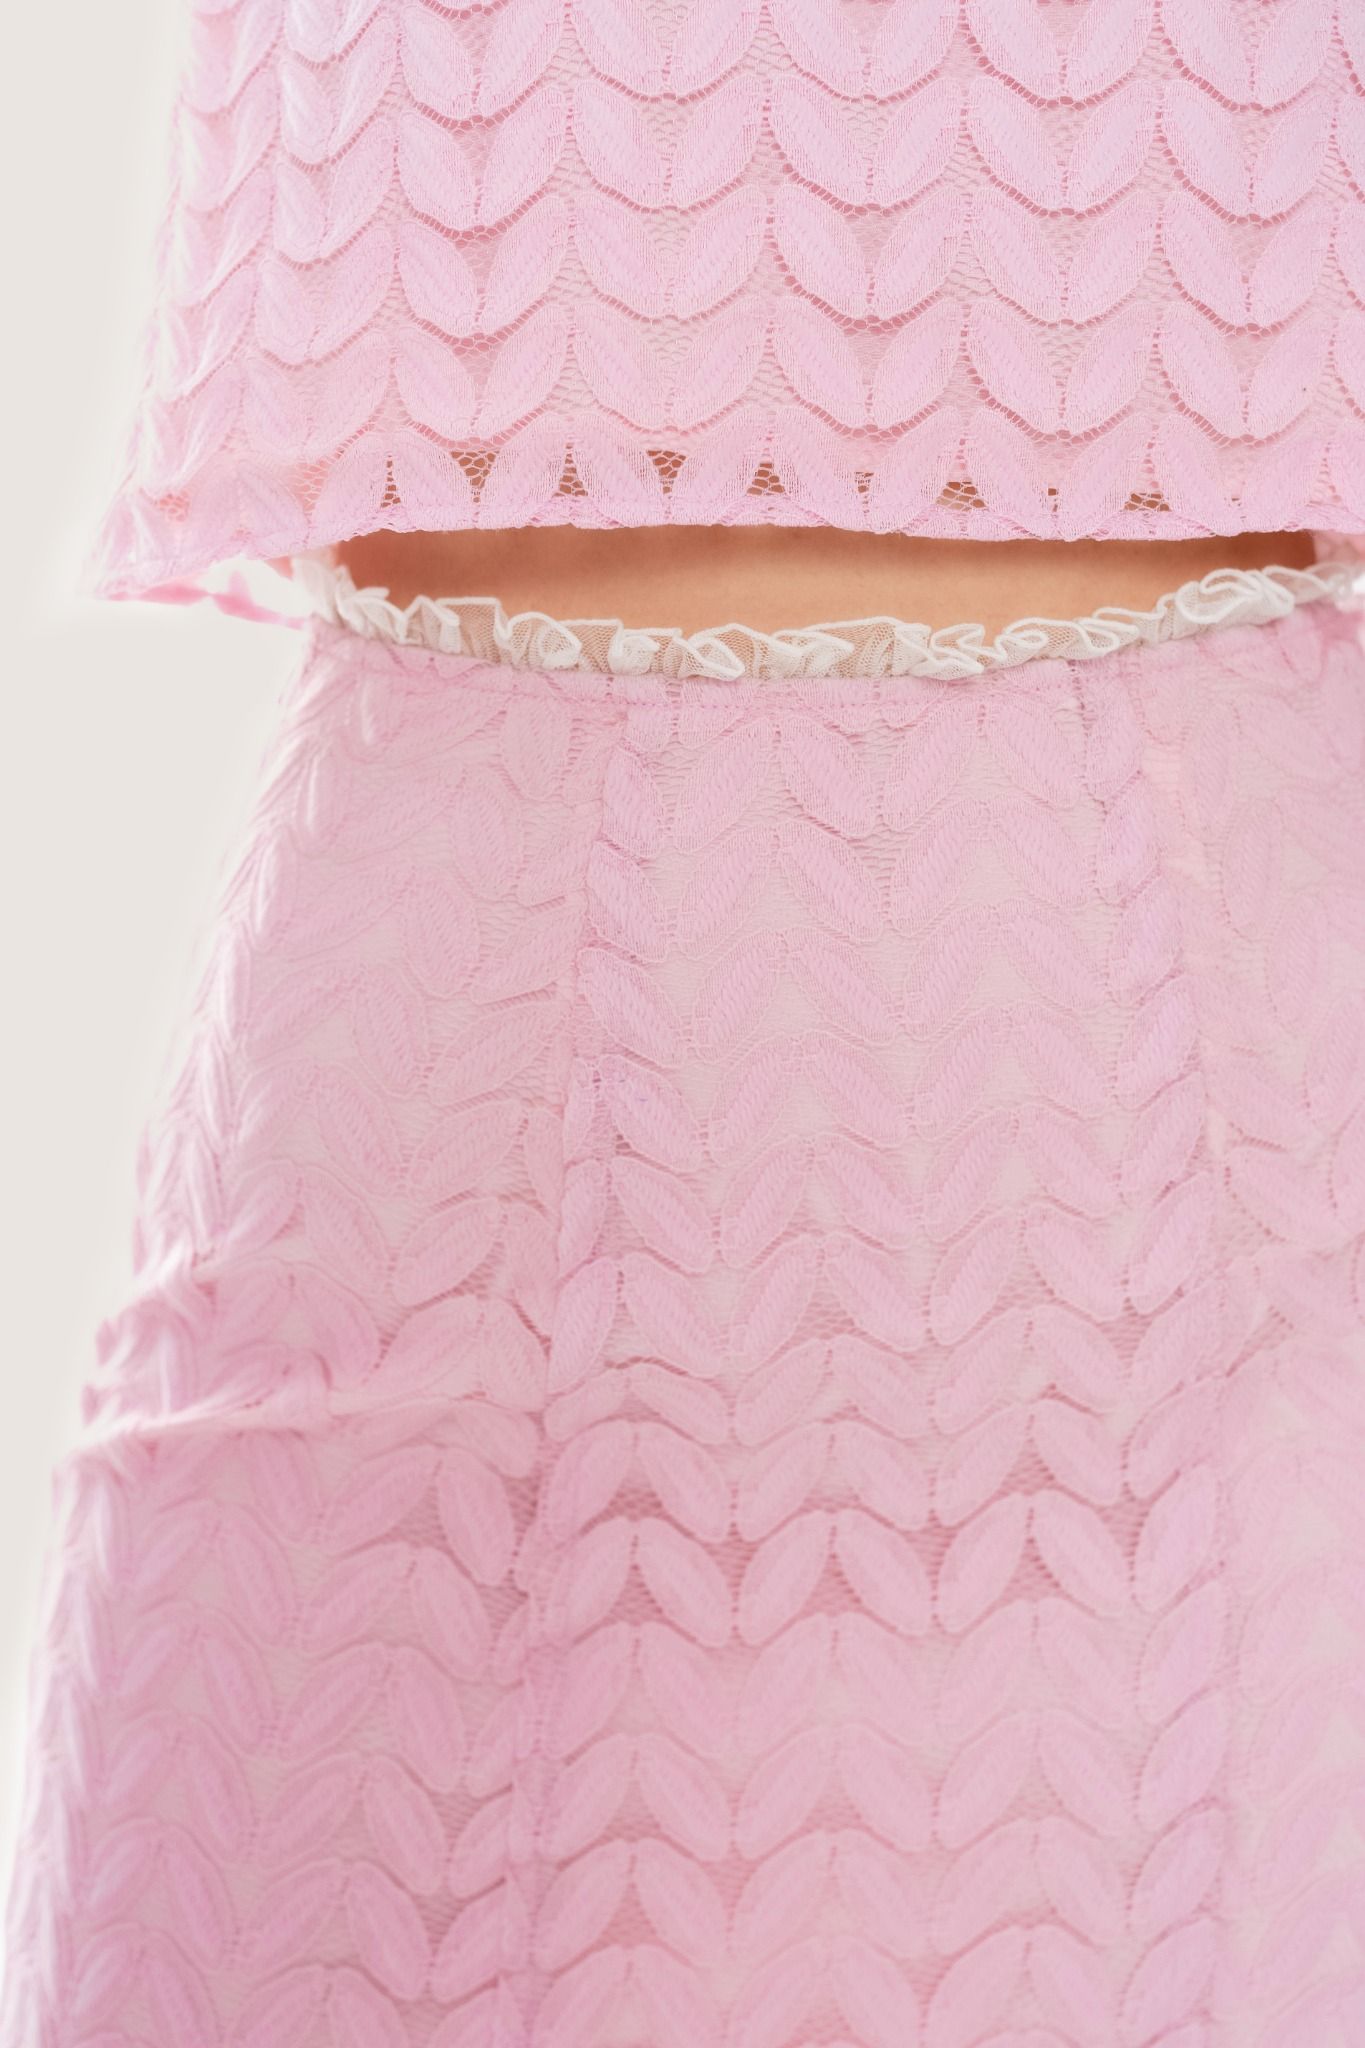  Bubble Gum Pink Lace Trimming Midi Skirt 